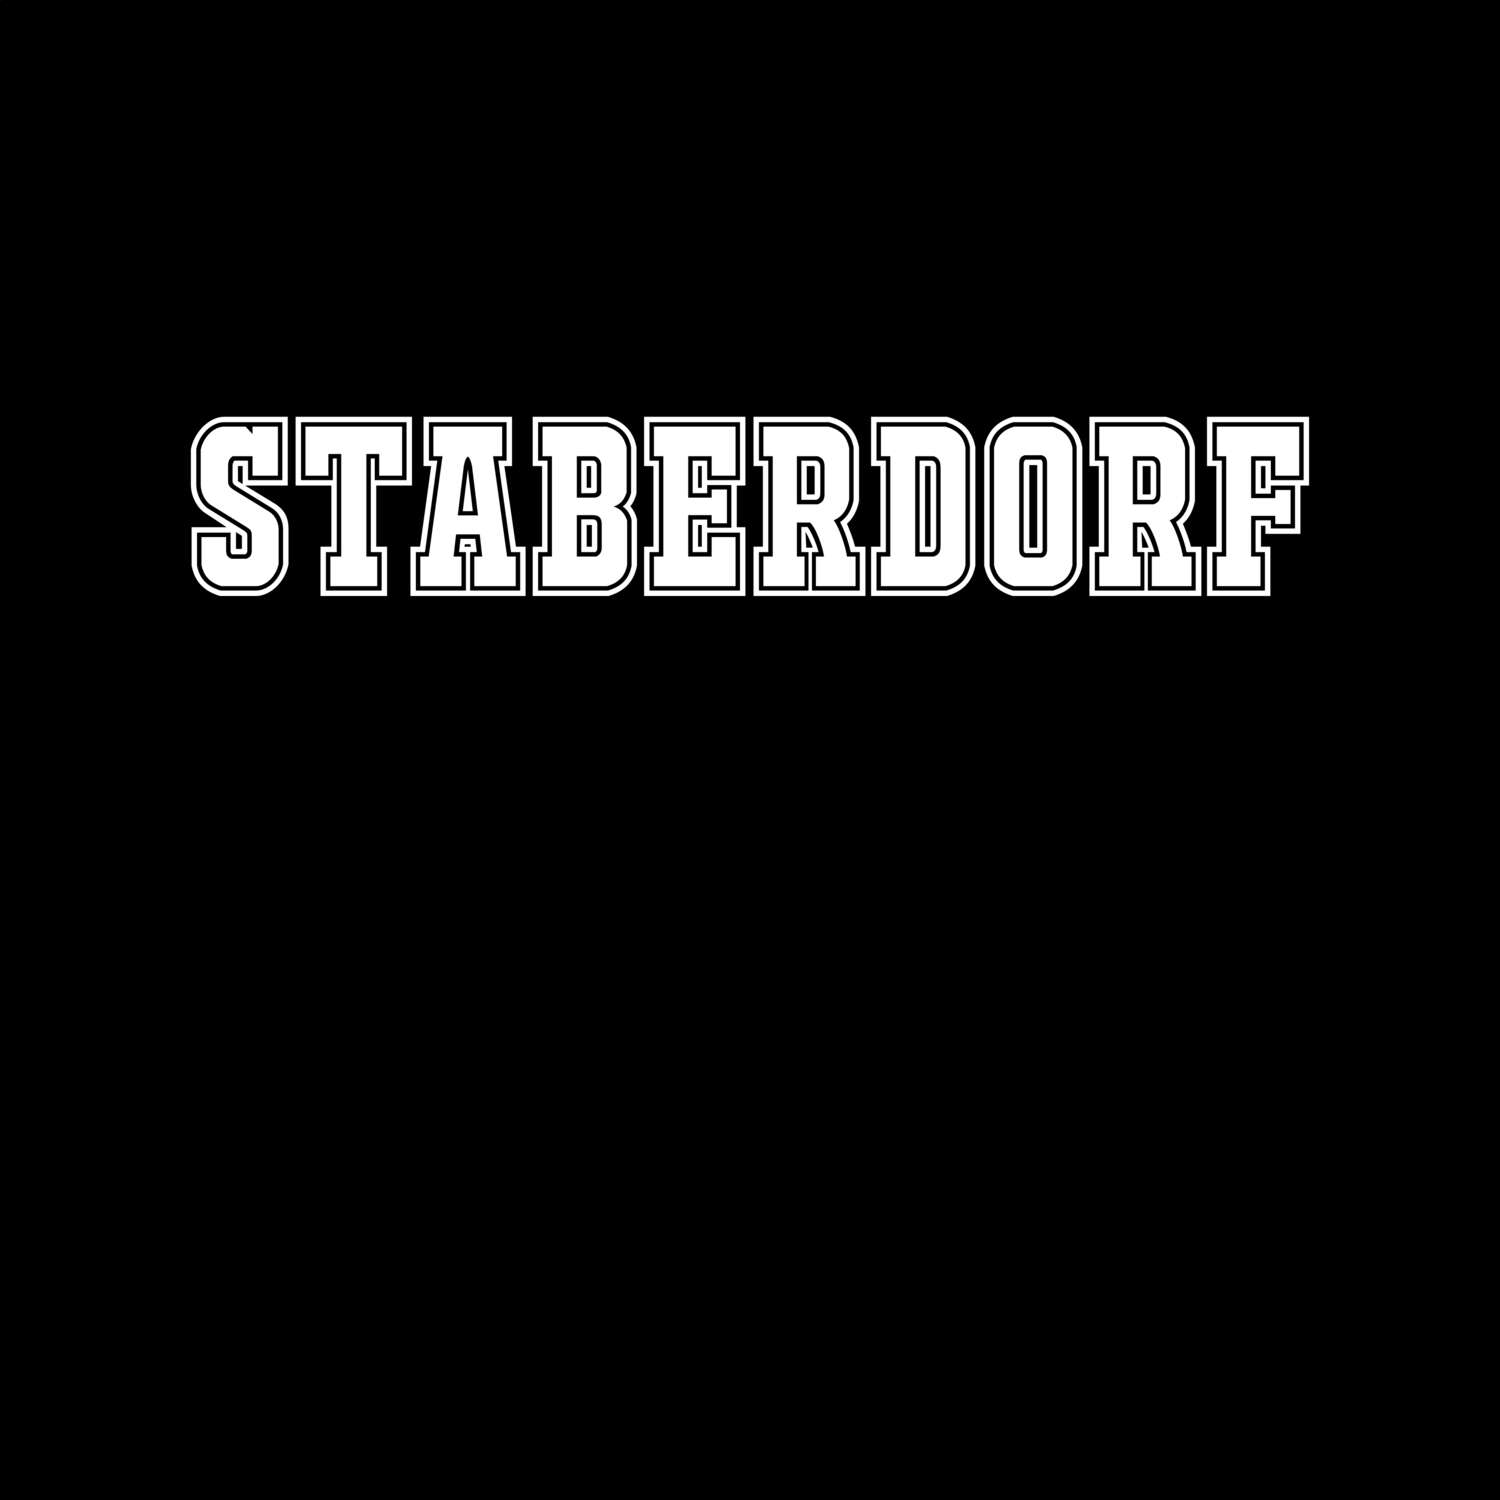 Staberdorf T-Shirt »Classic«